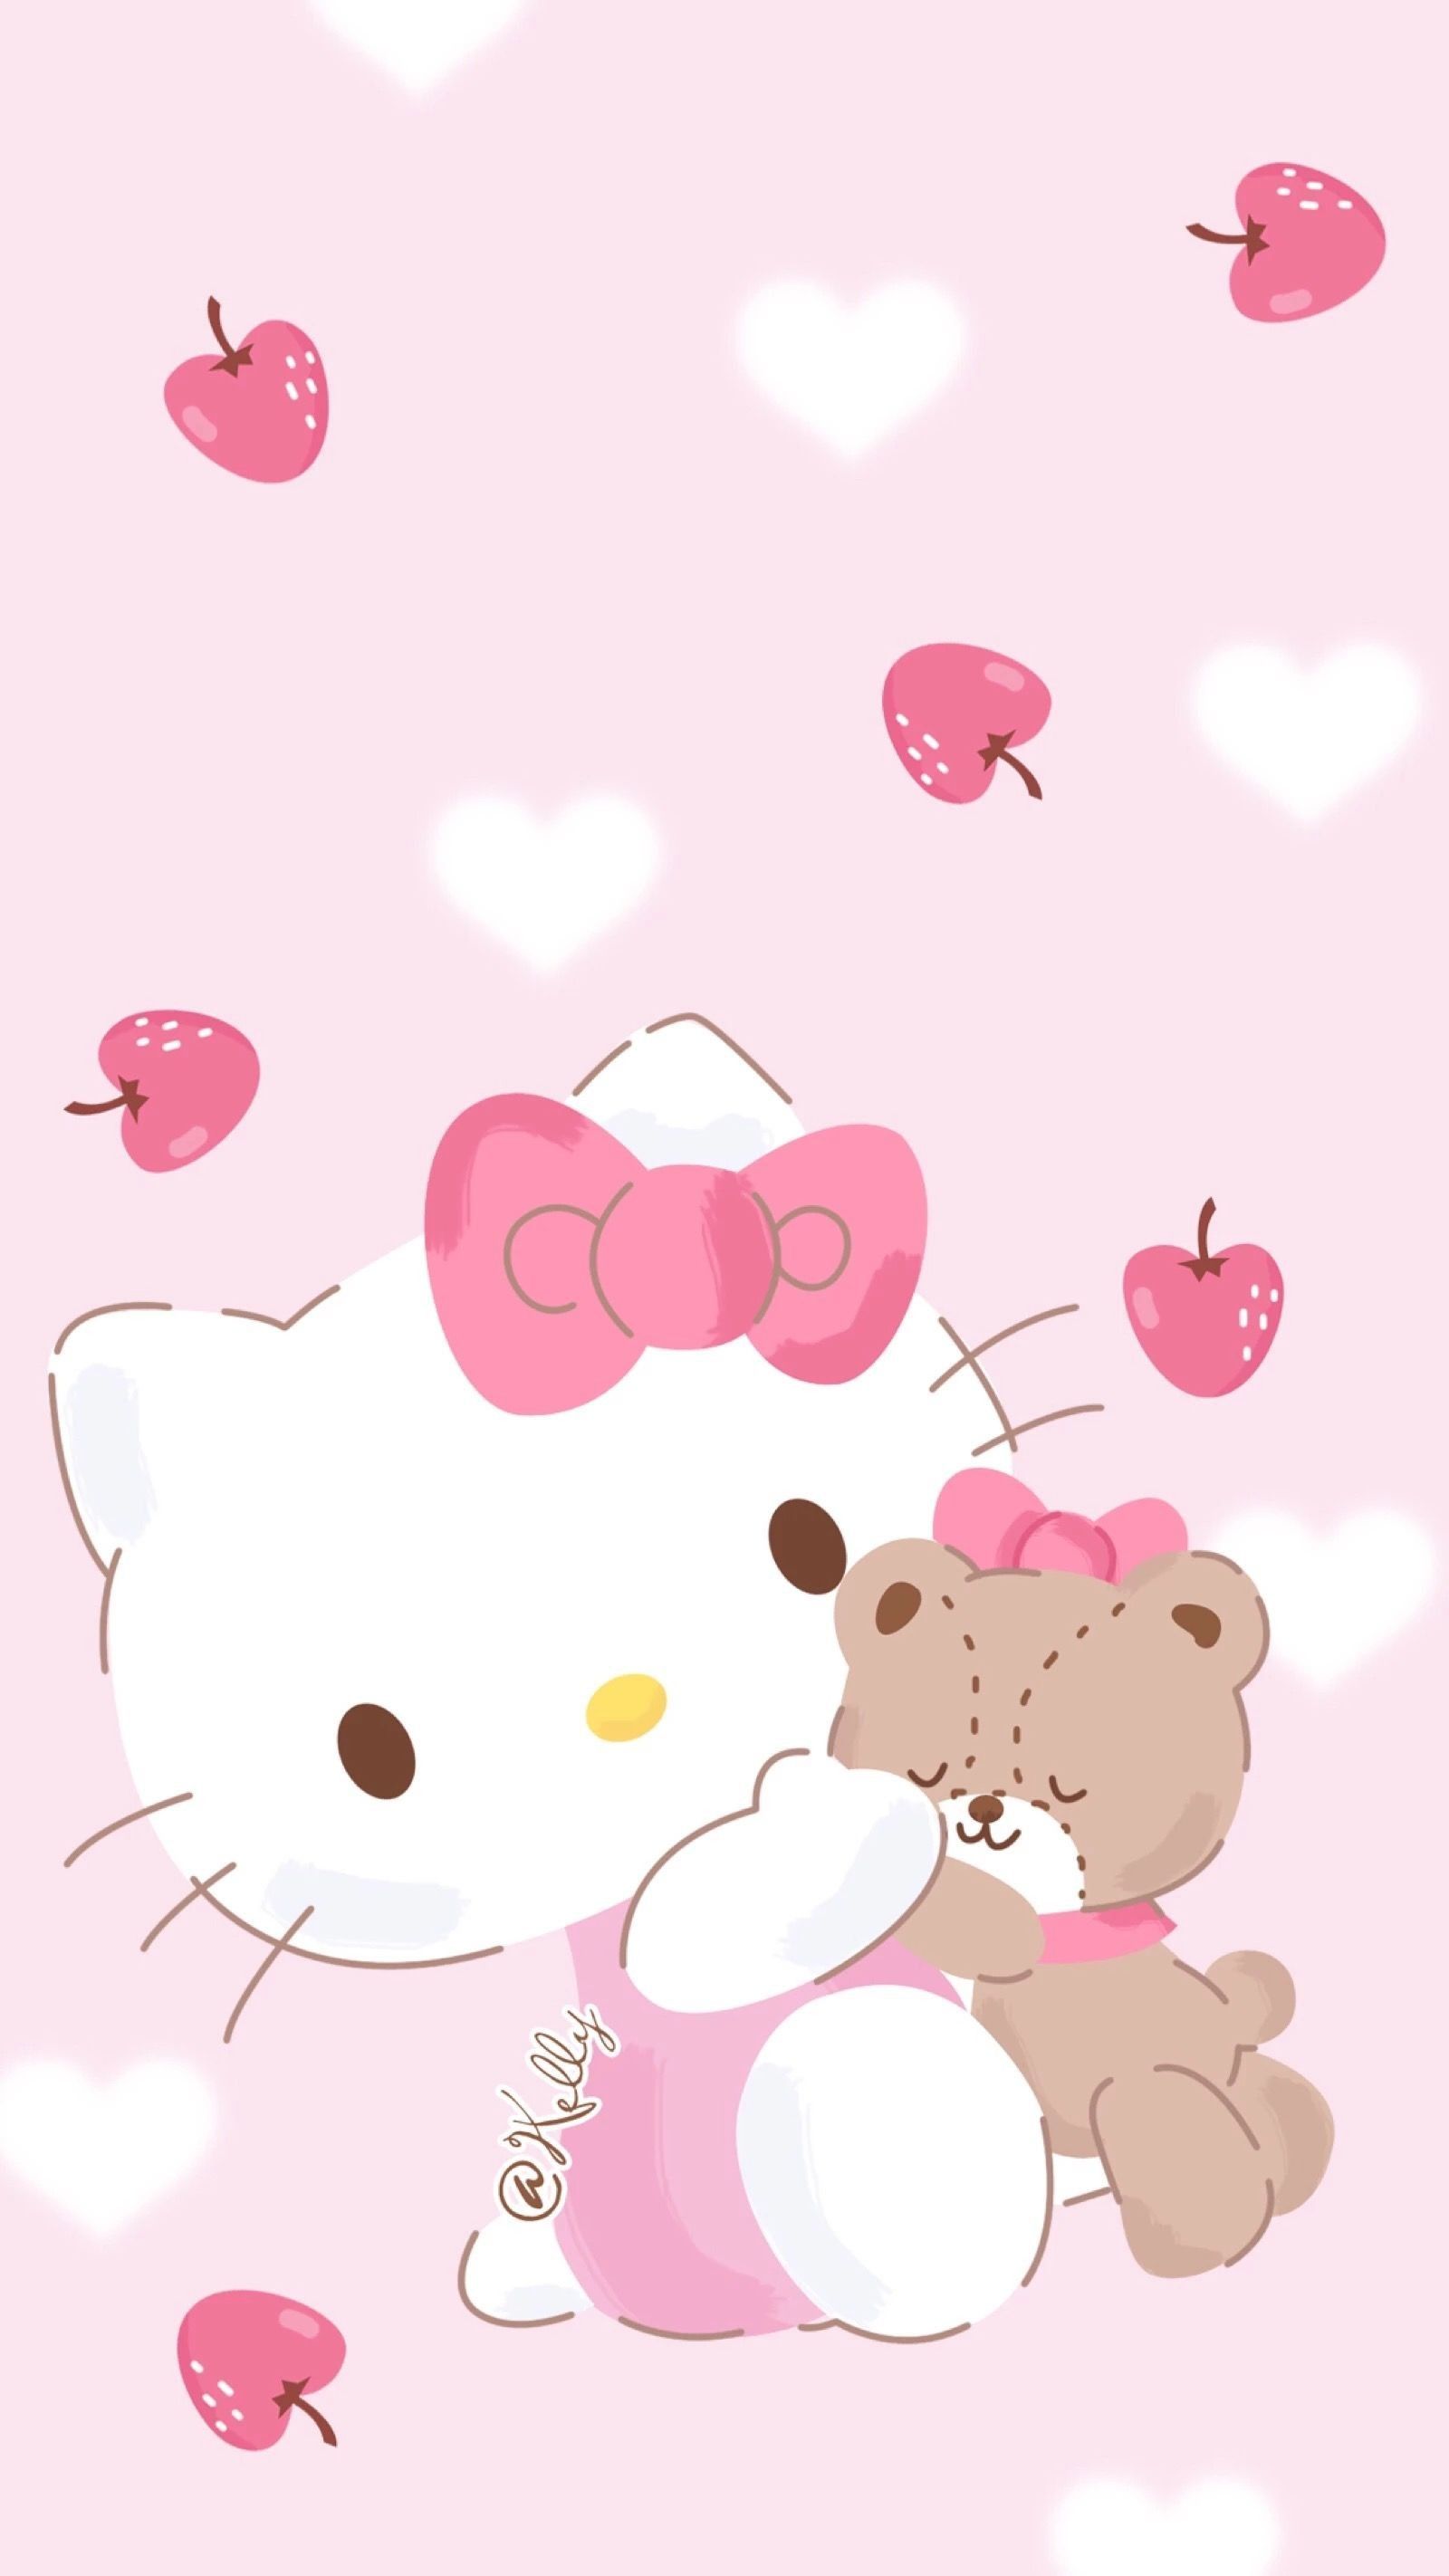 Kawaii Valentine iPhone Wallpaper. ipcwallpaper. Hello kitty picture, Hello kitty art, Hello kitty coloring